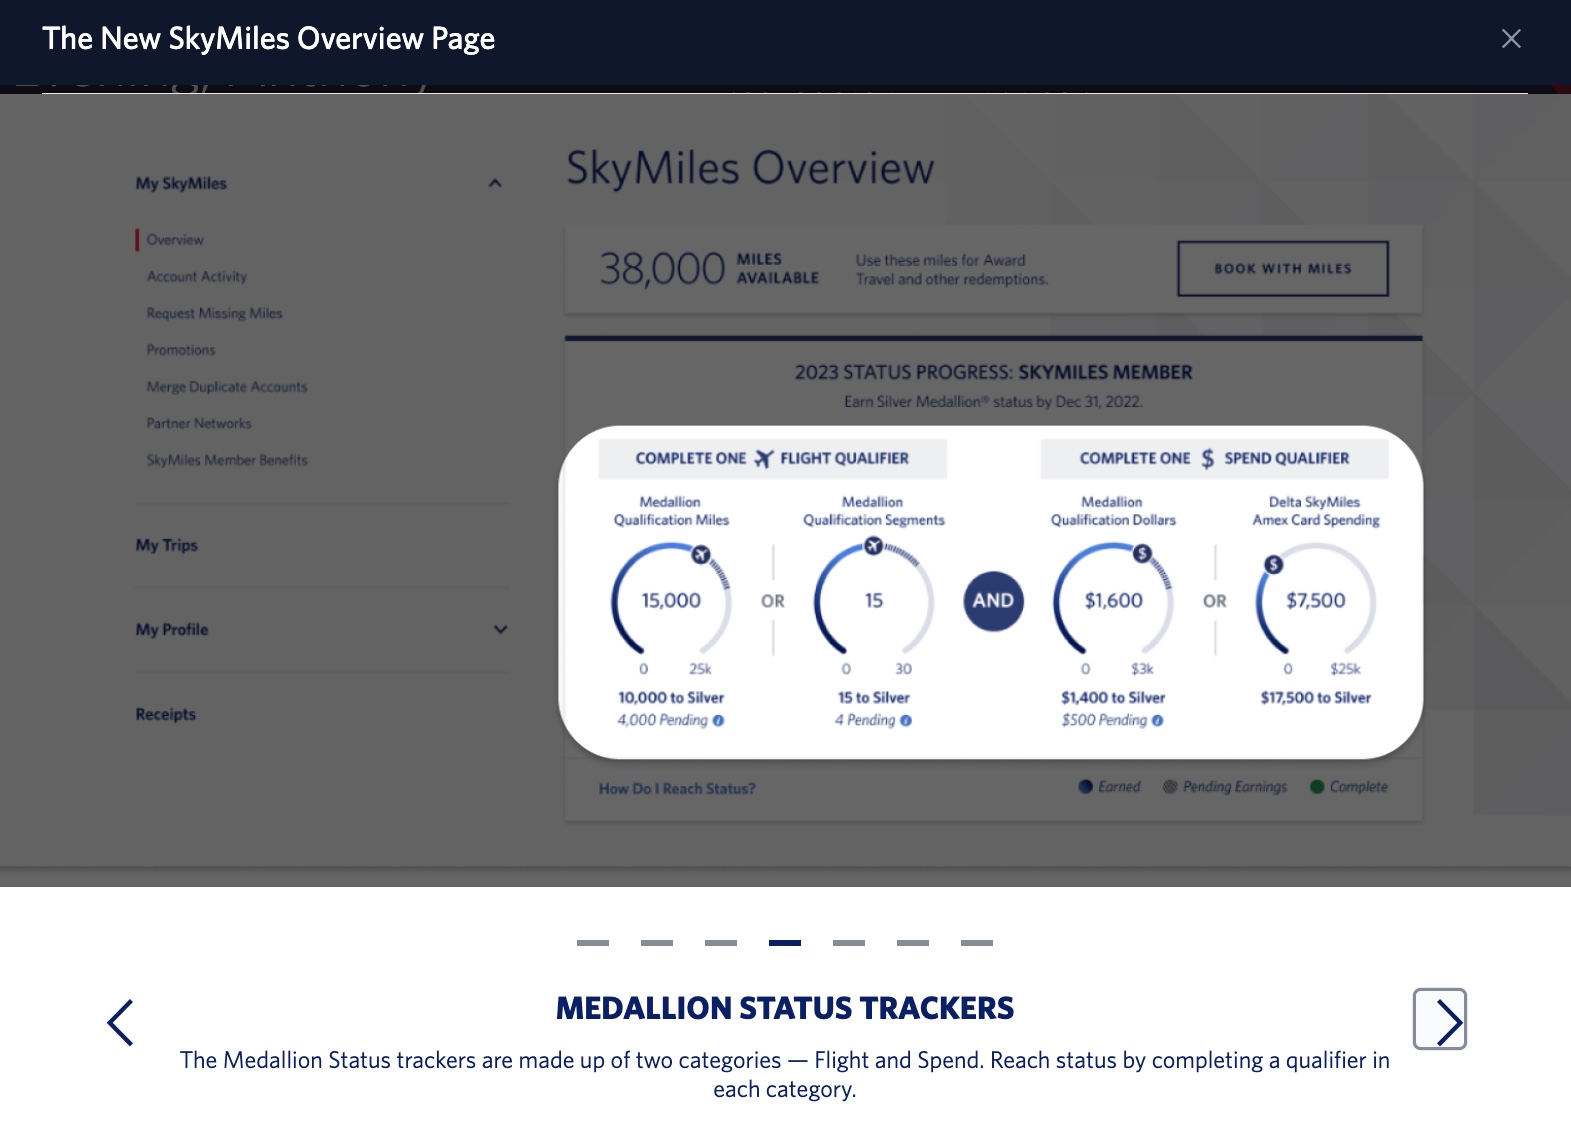 Medallion Status Tracker